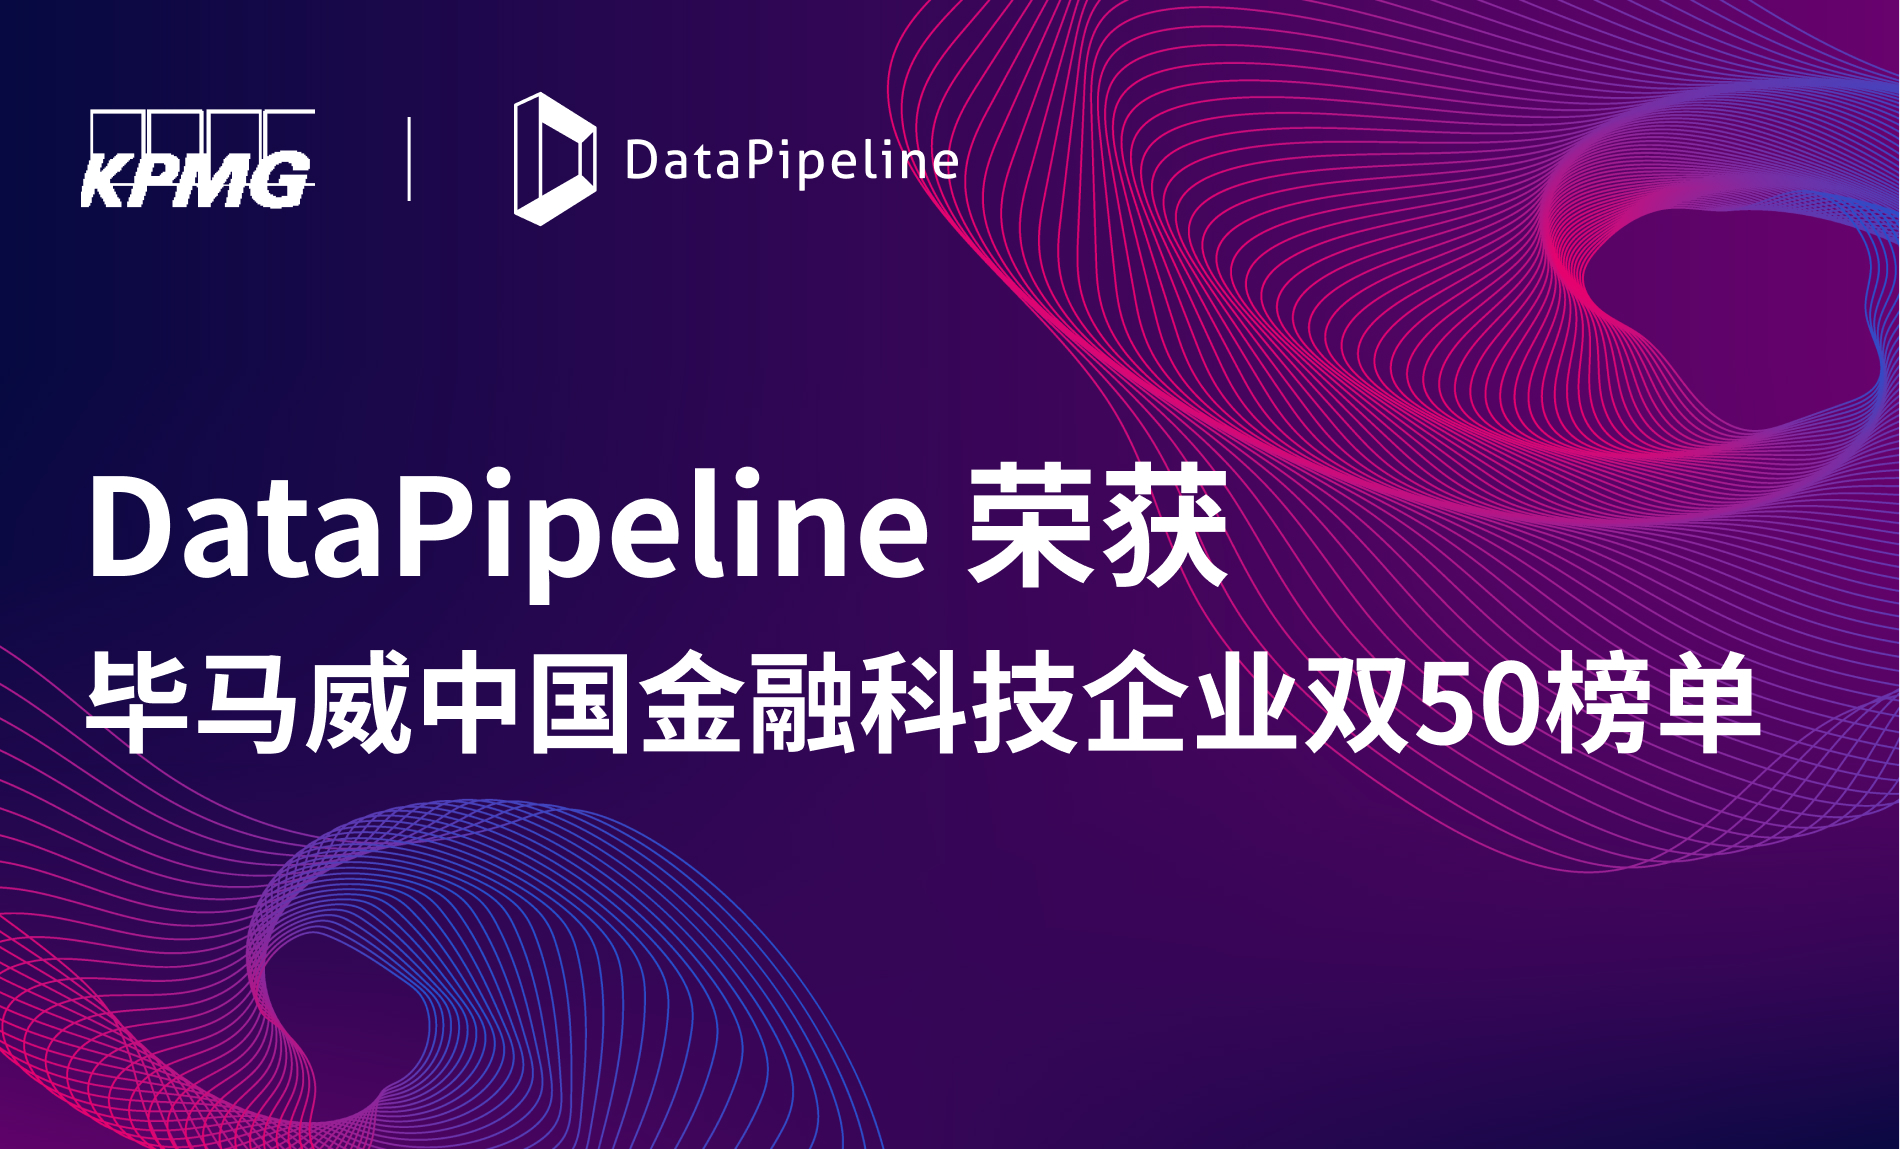 DataPipeline荣获毕马威中国金融科技企业双50榜单